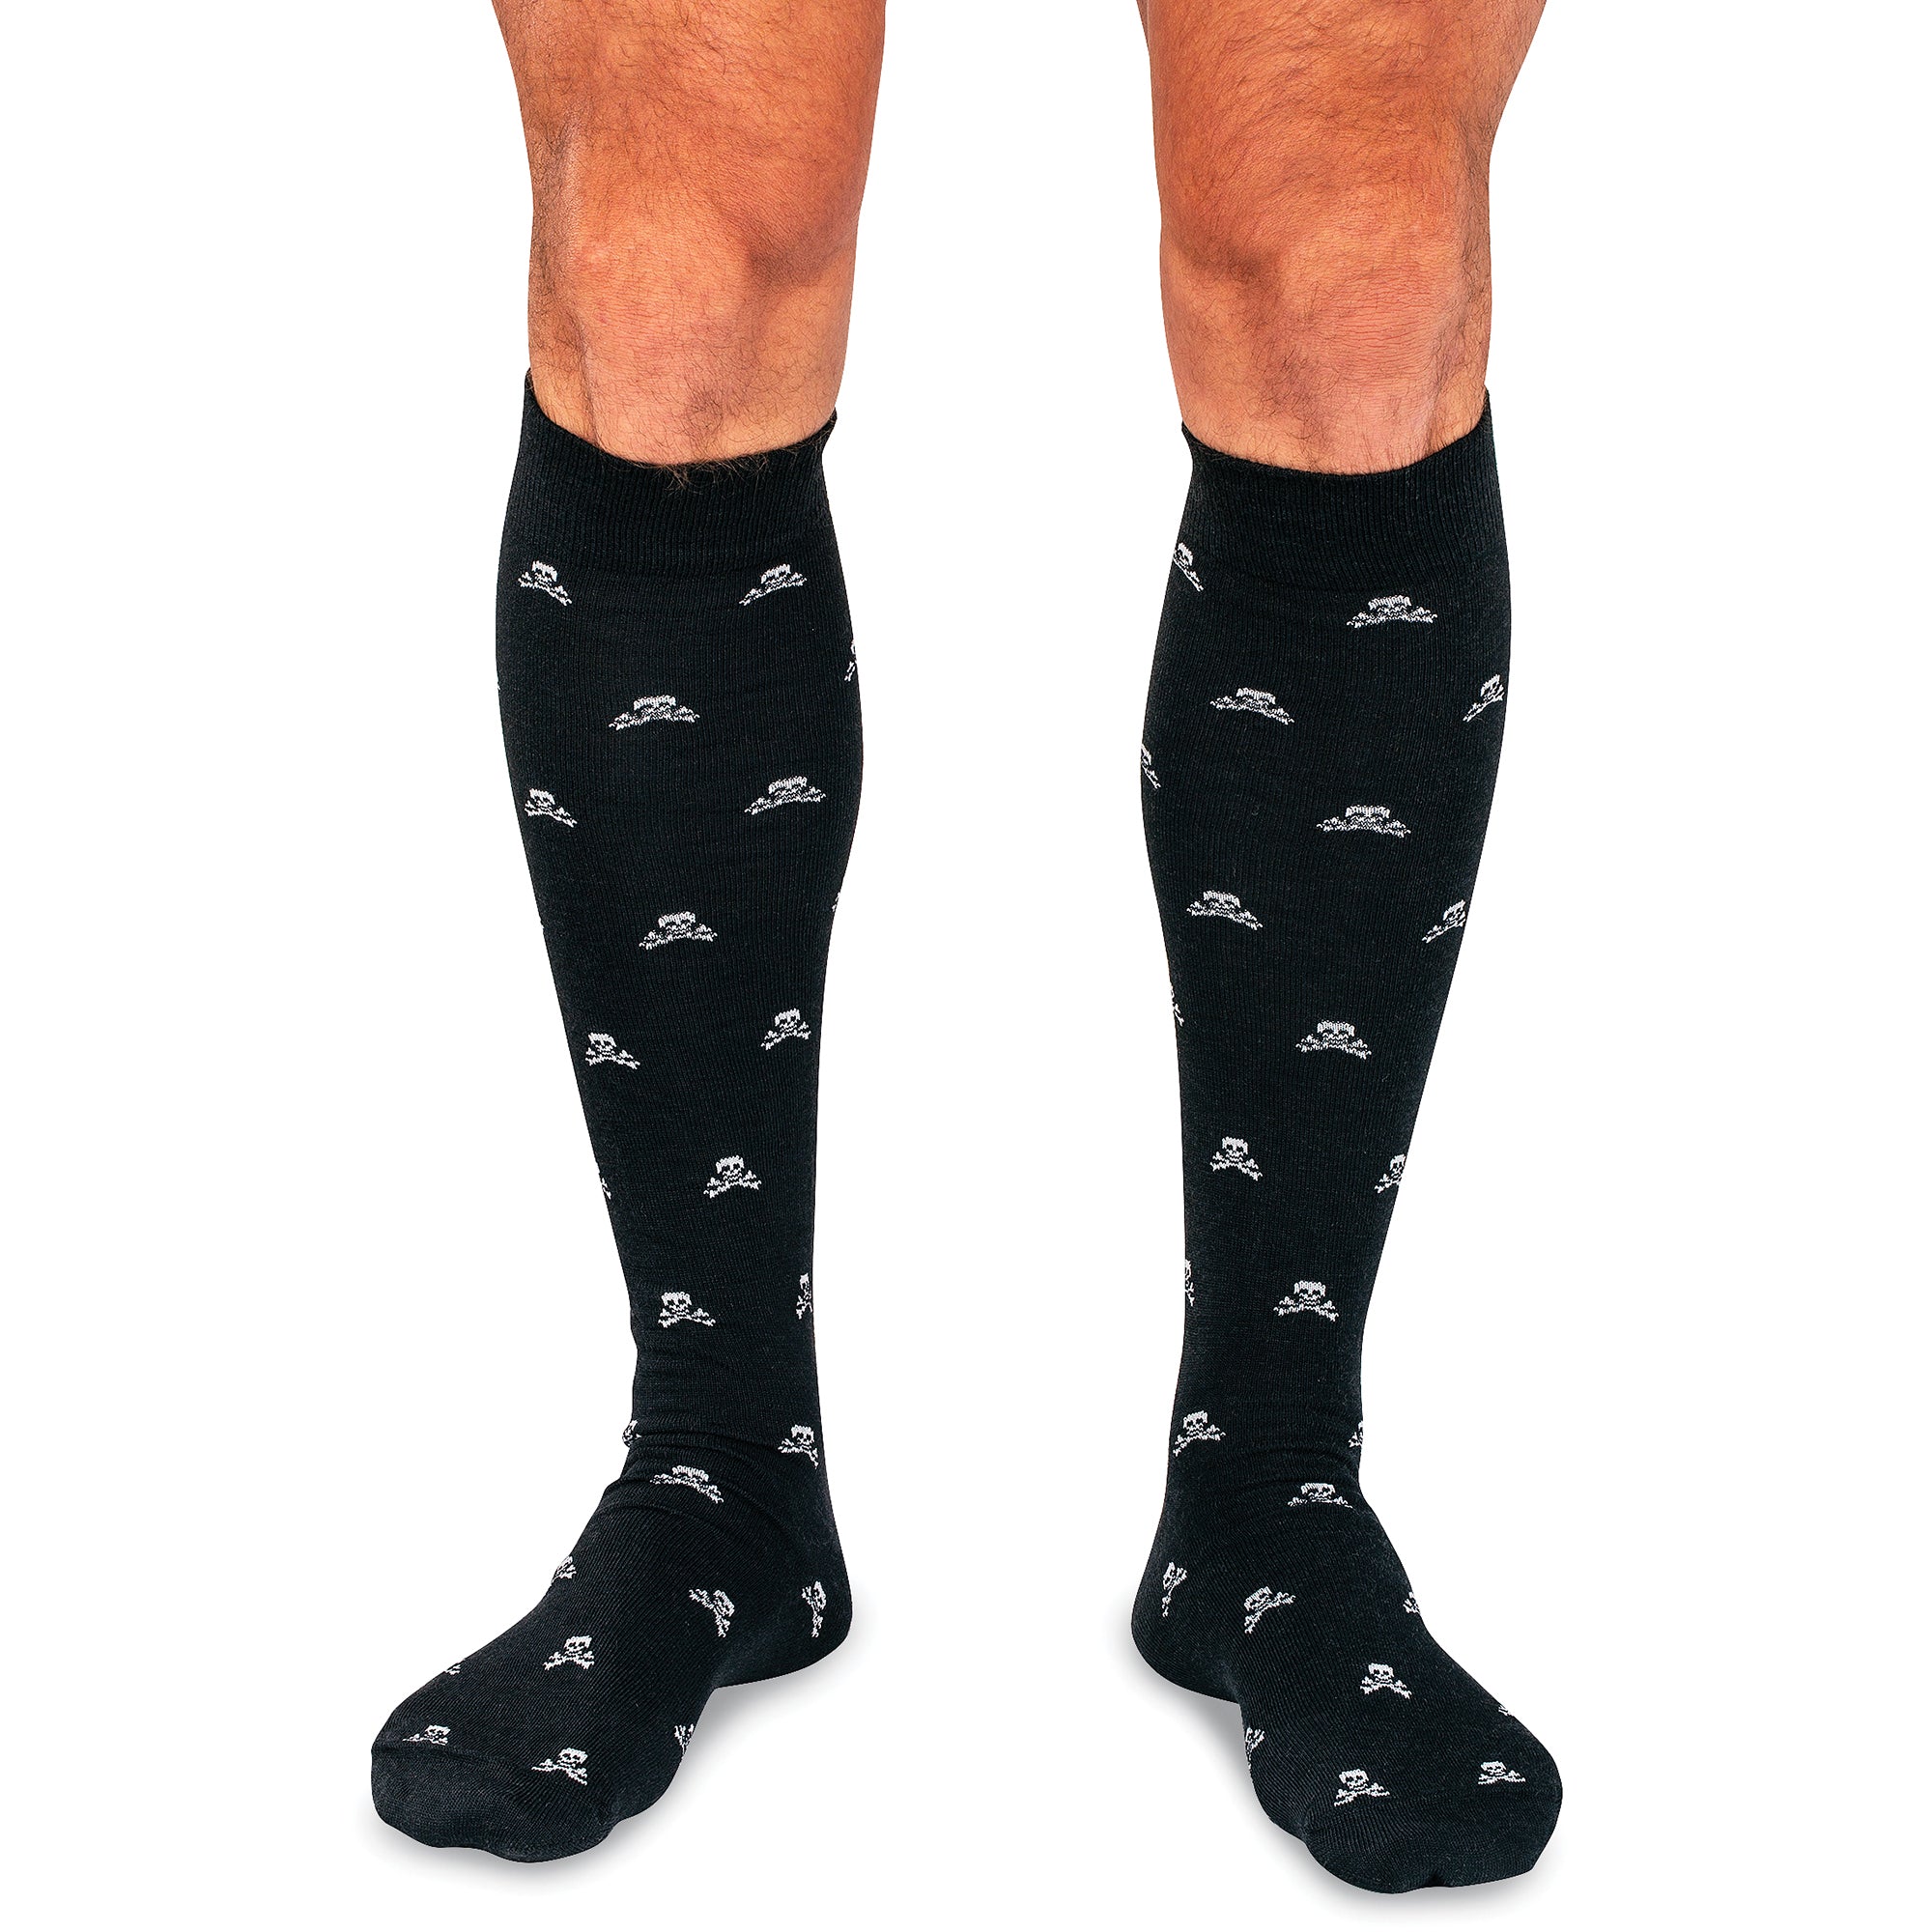 What is the Best Material for Dress Socks? - Boardroom Socks